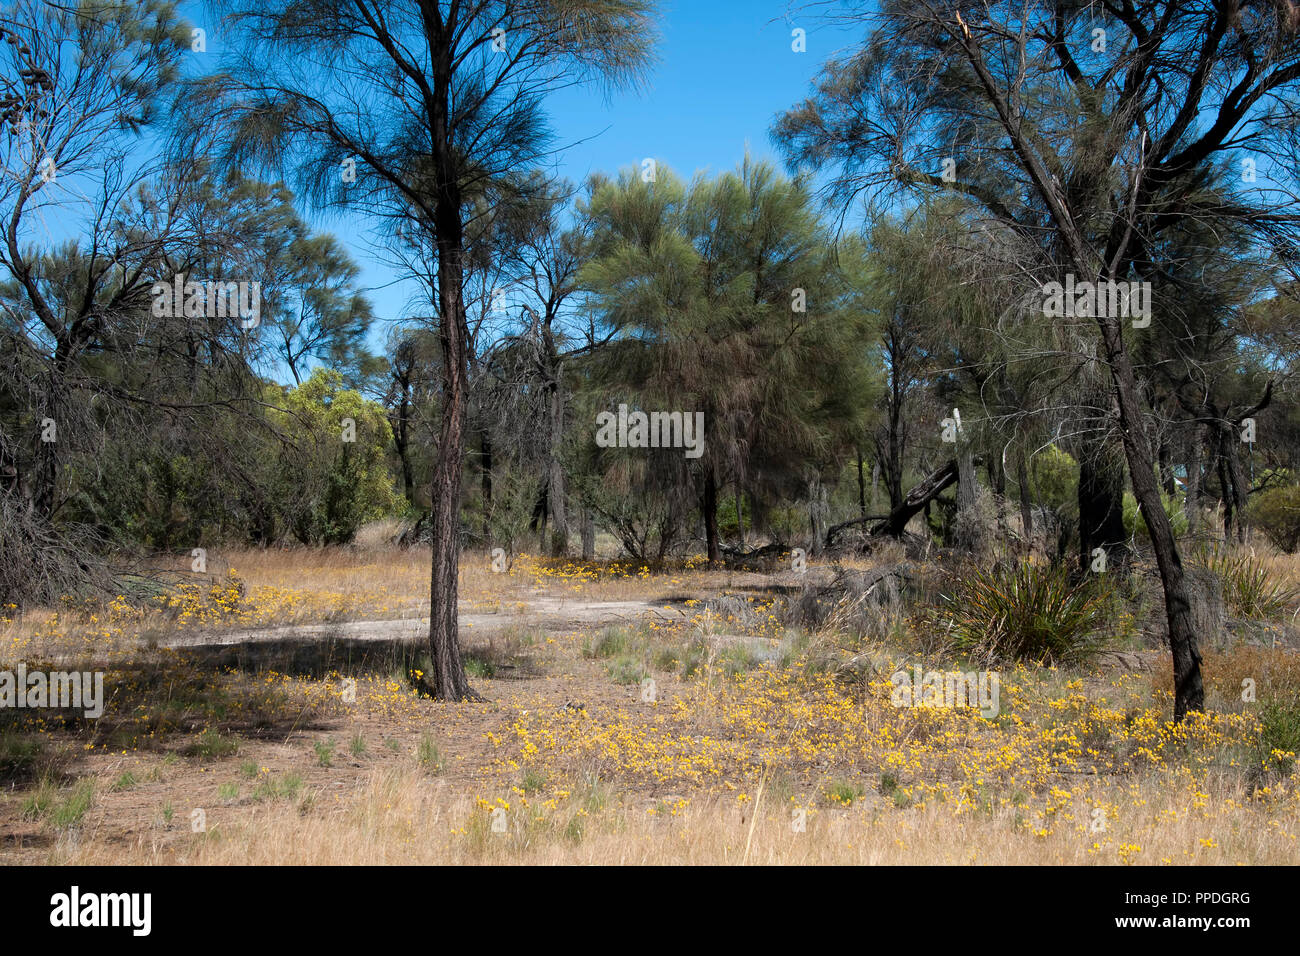 Hyden Australia, bush scene with sheoak trees and yellow wildflowers Stock Photo